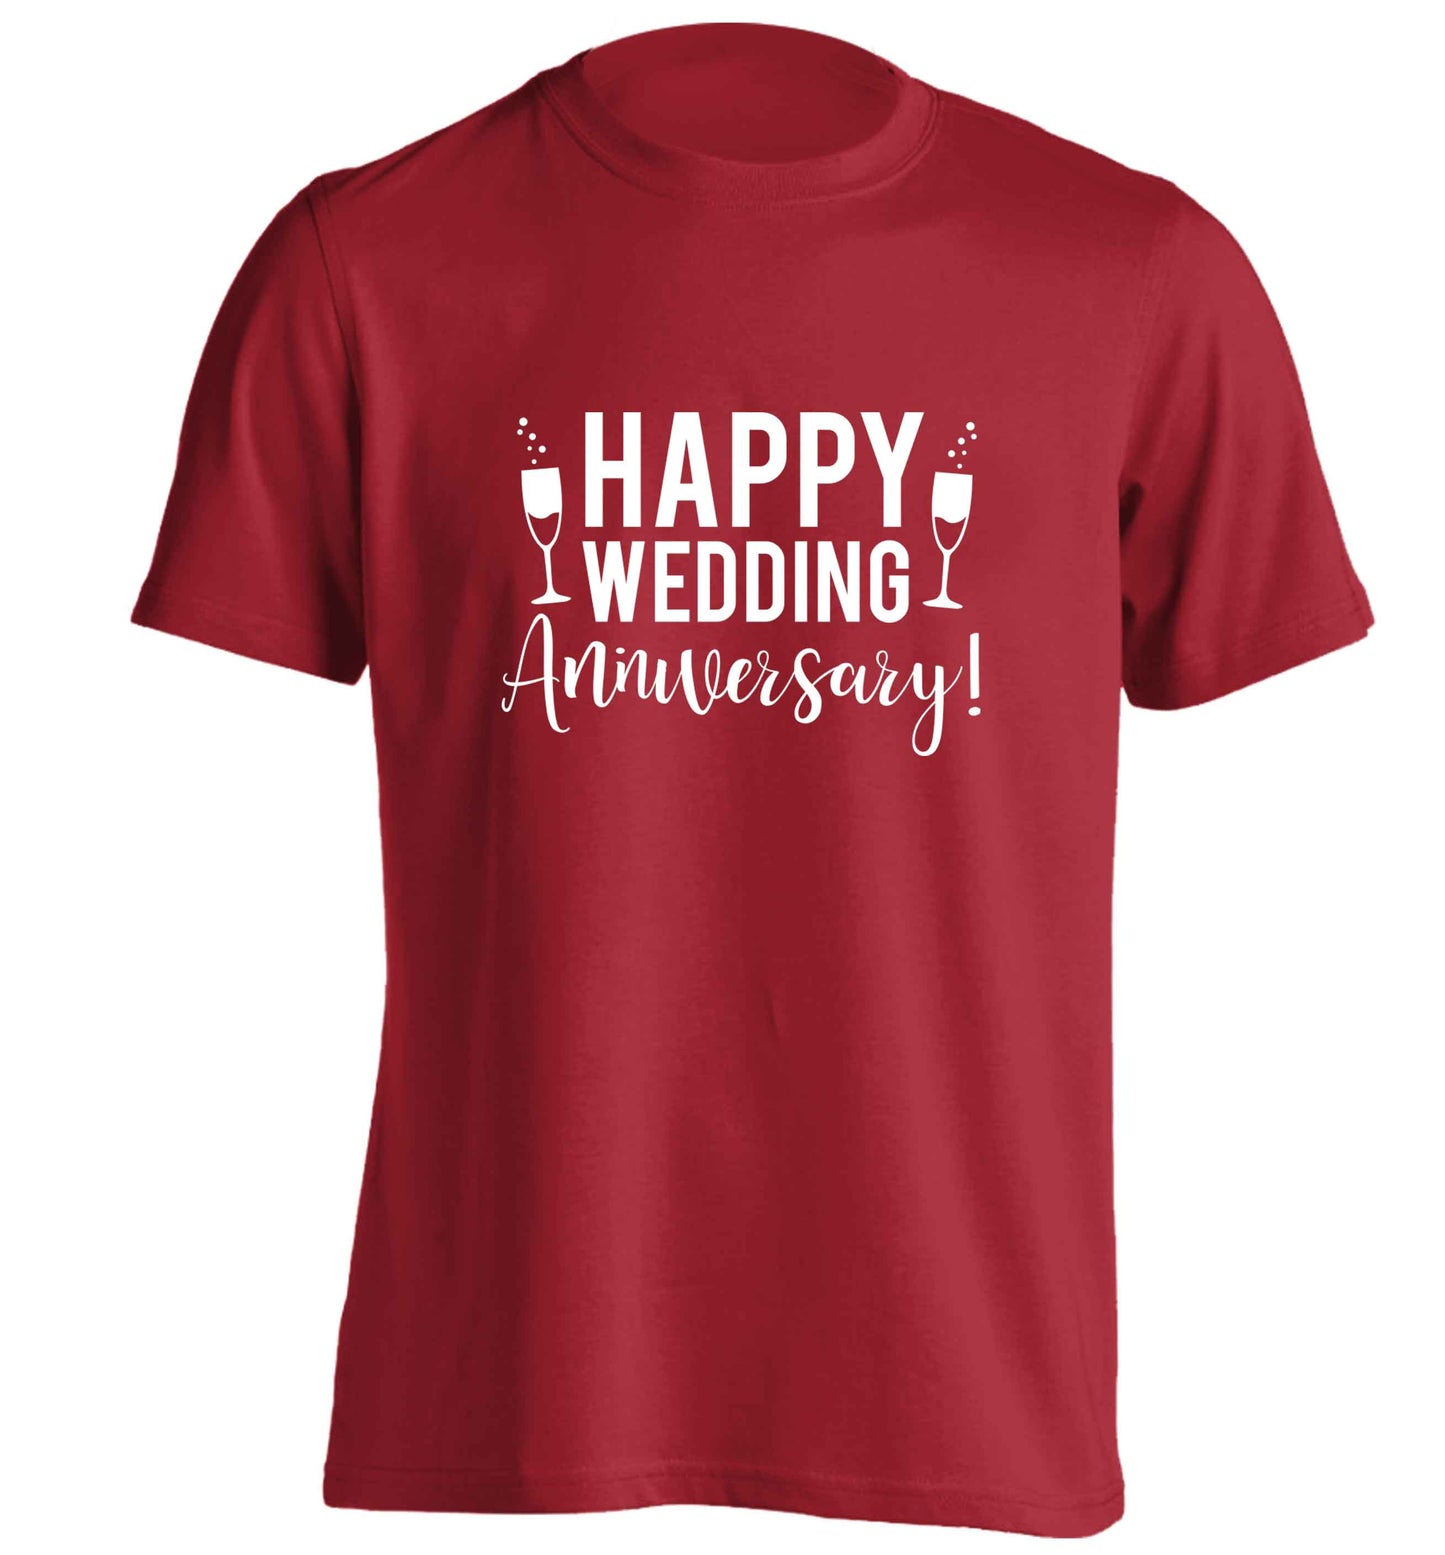 Happy wedding anniversary! adults unisex red Tshirt 2XL